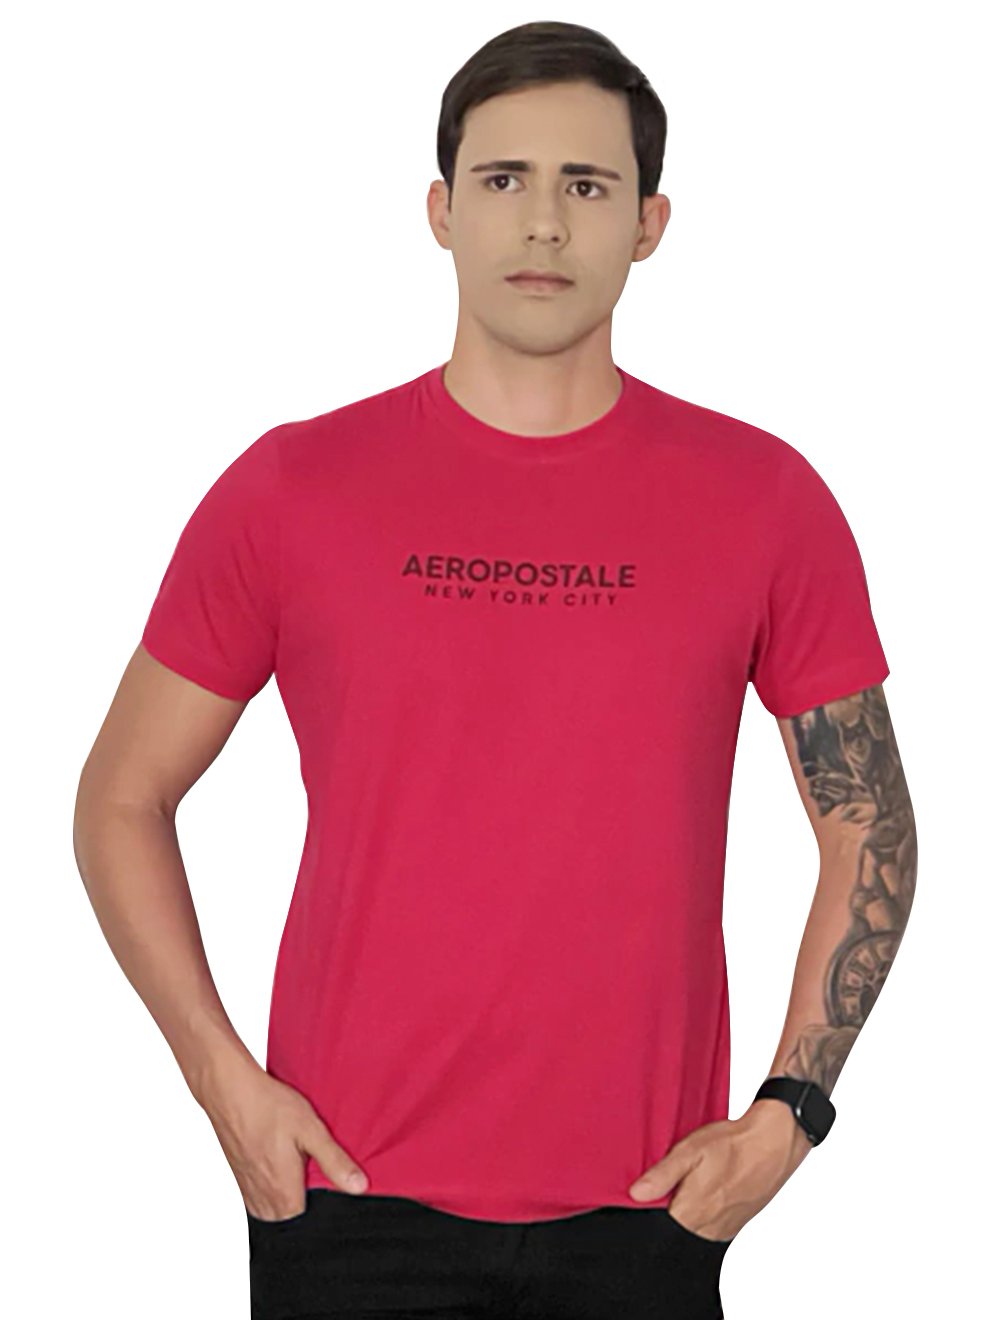 Camiseta Aeropostale Masculina Colors New York City Rosa Escuro